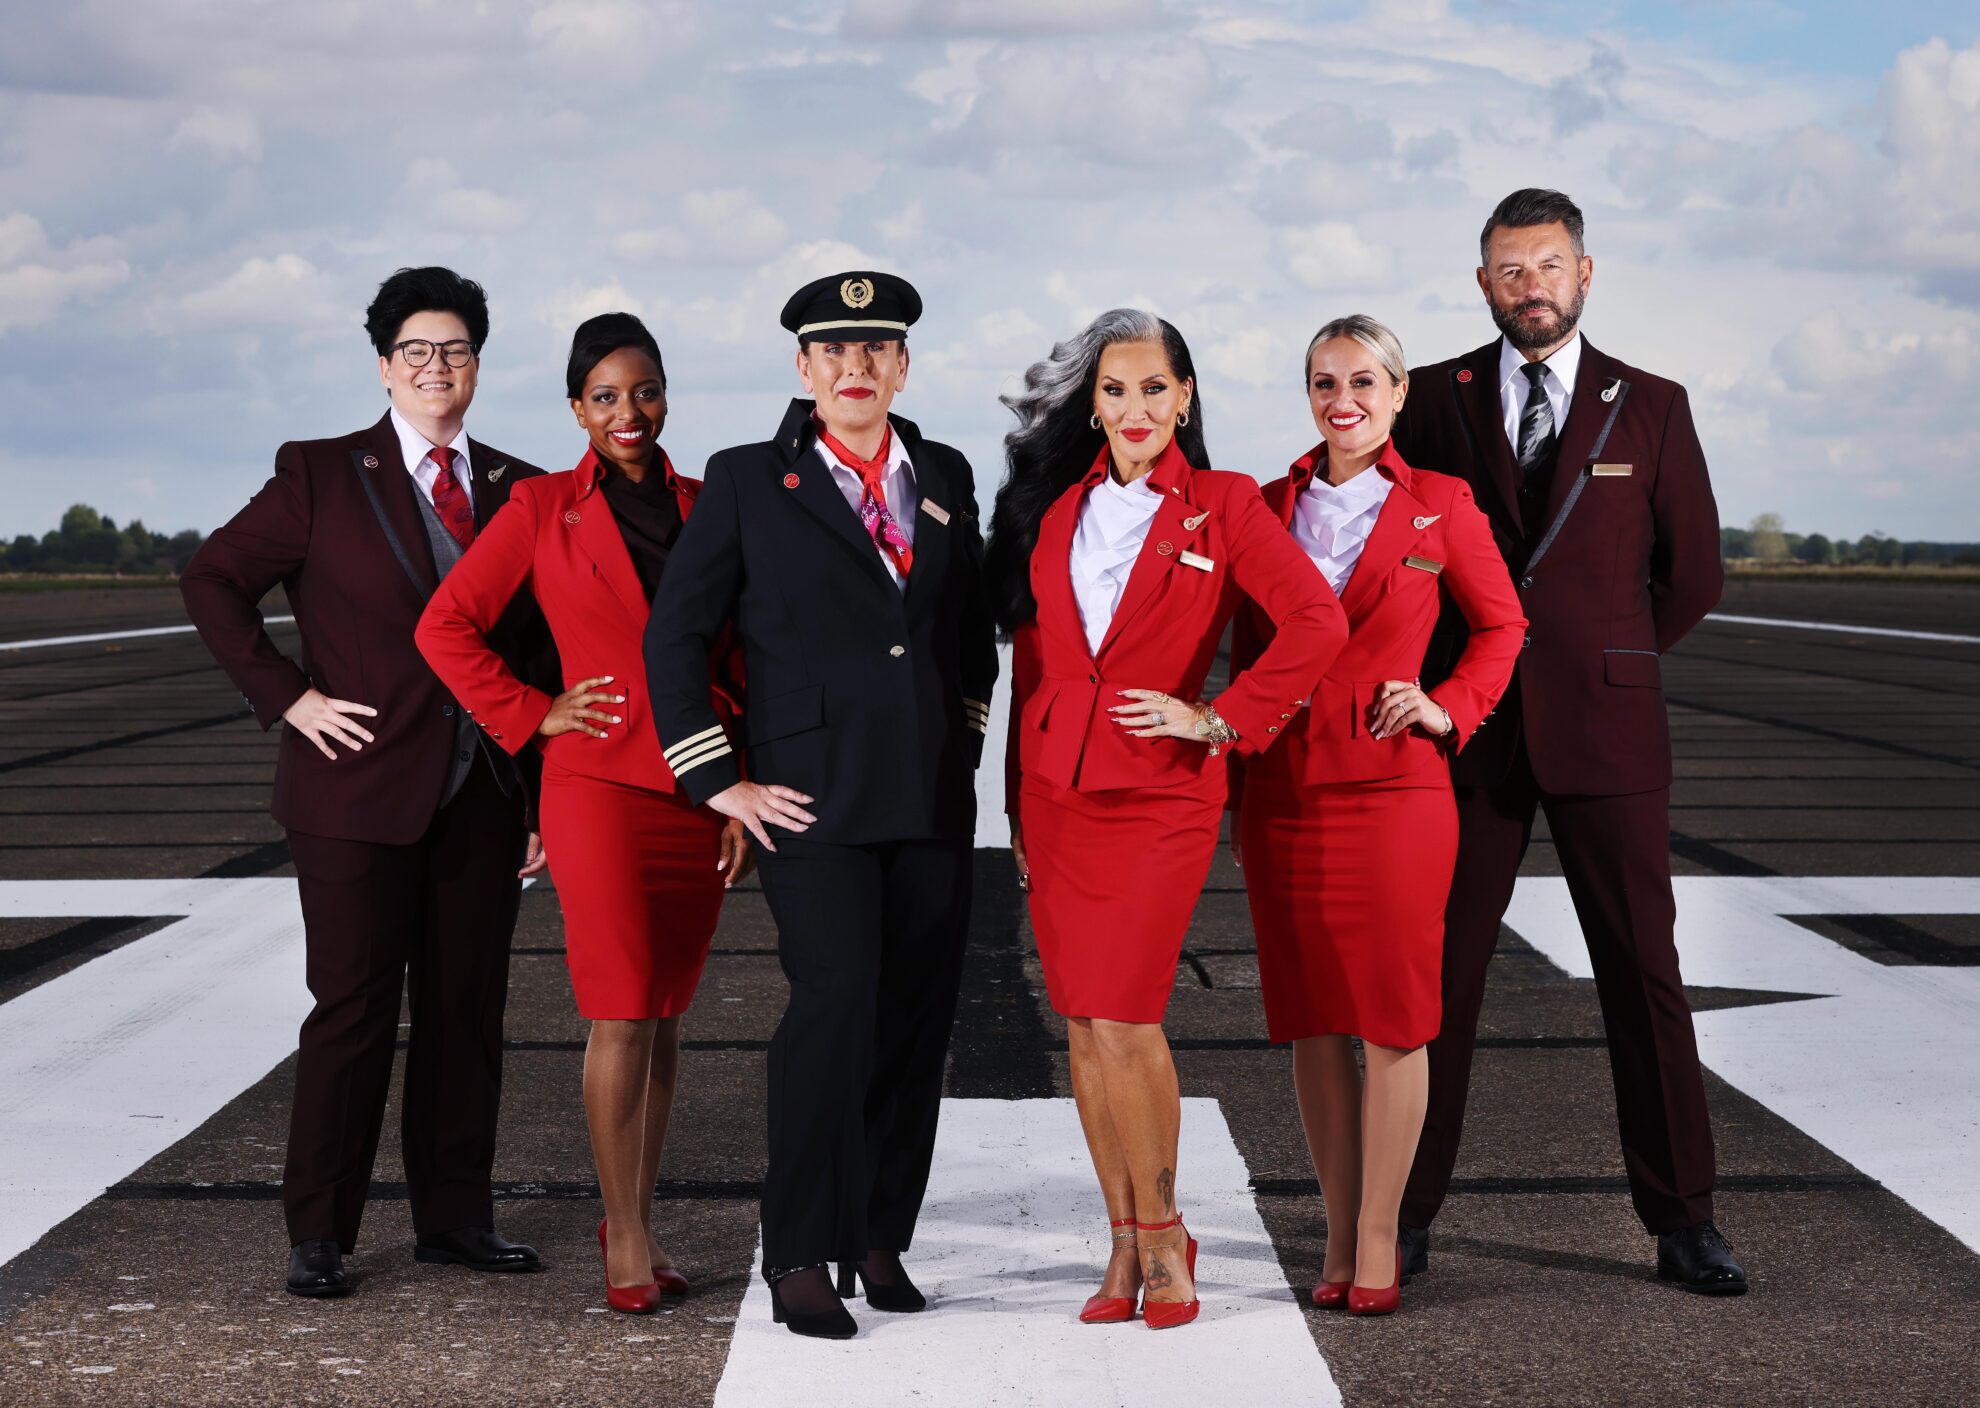 Virgin Atlantic crew